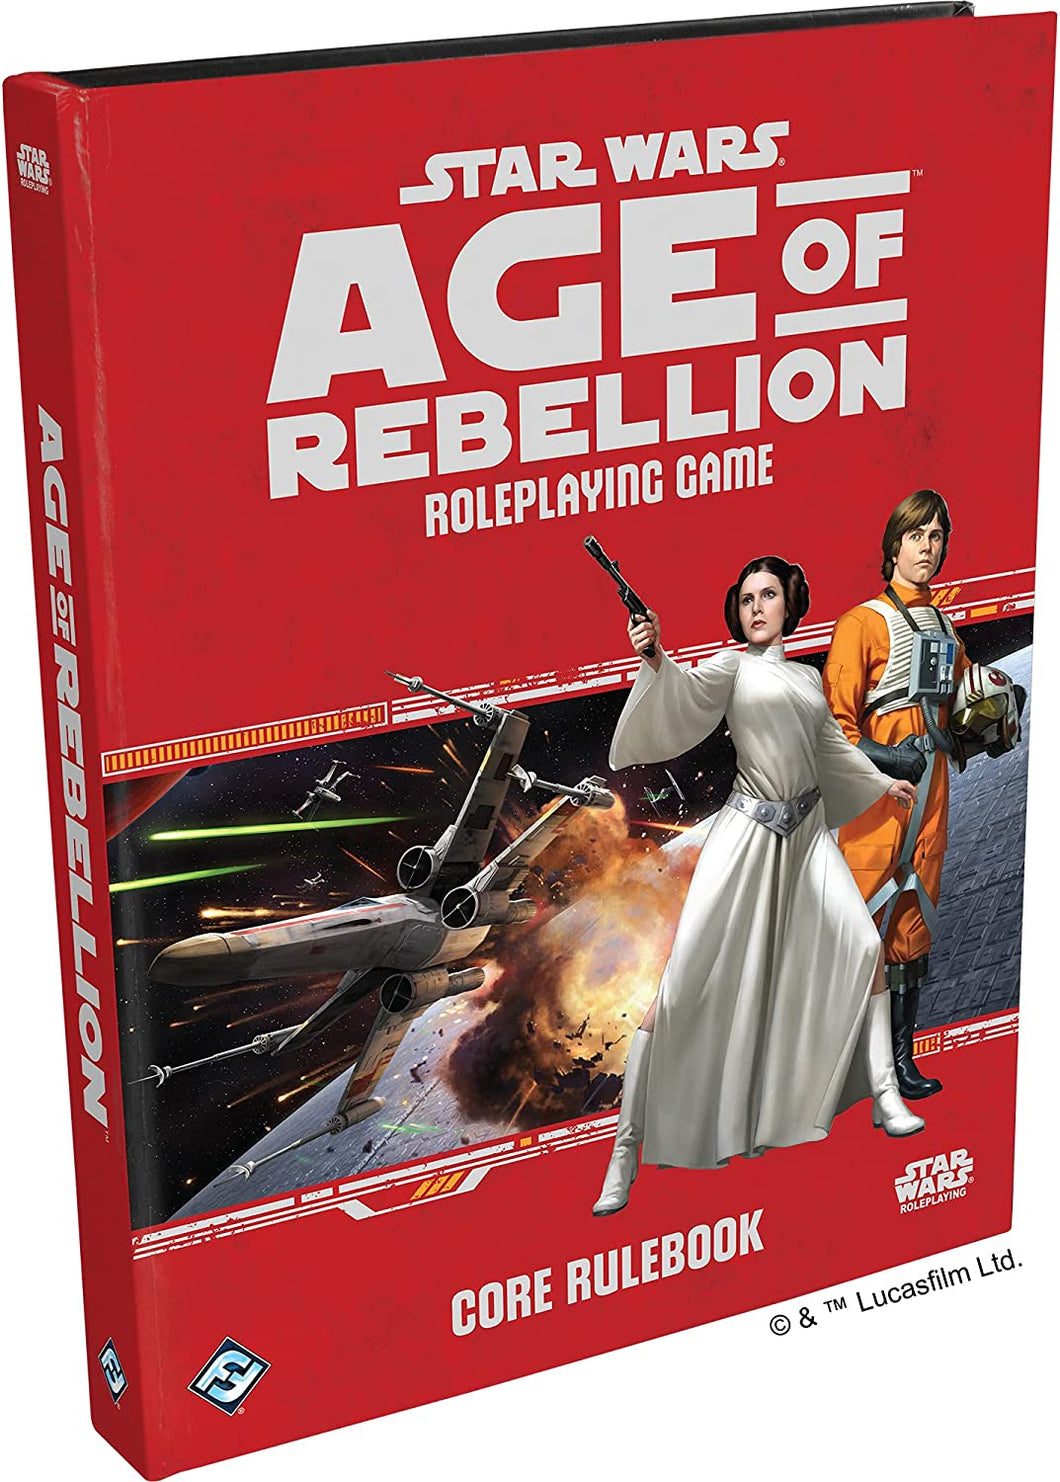 Star Wars Age of Rebellion RPG Core Rulebook